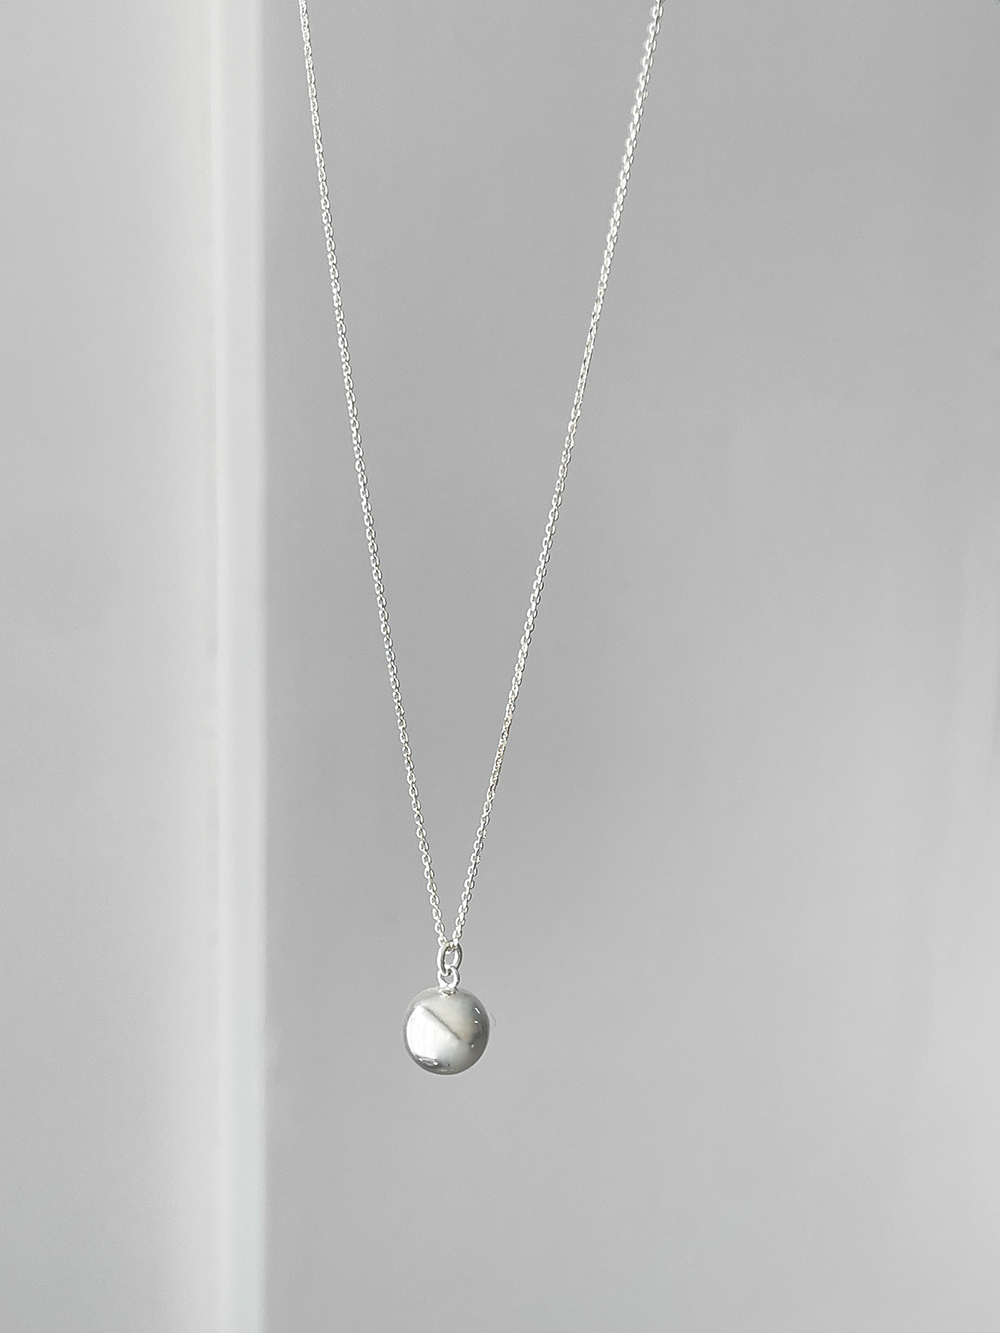 silver925) drop ball necklace